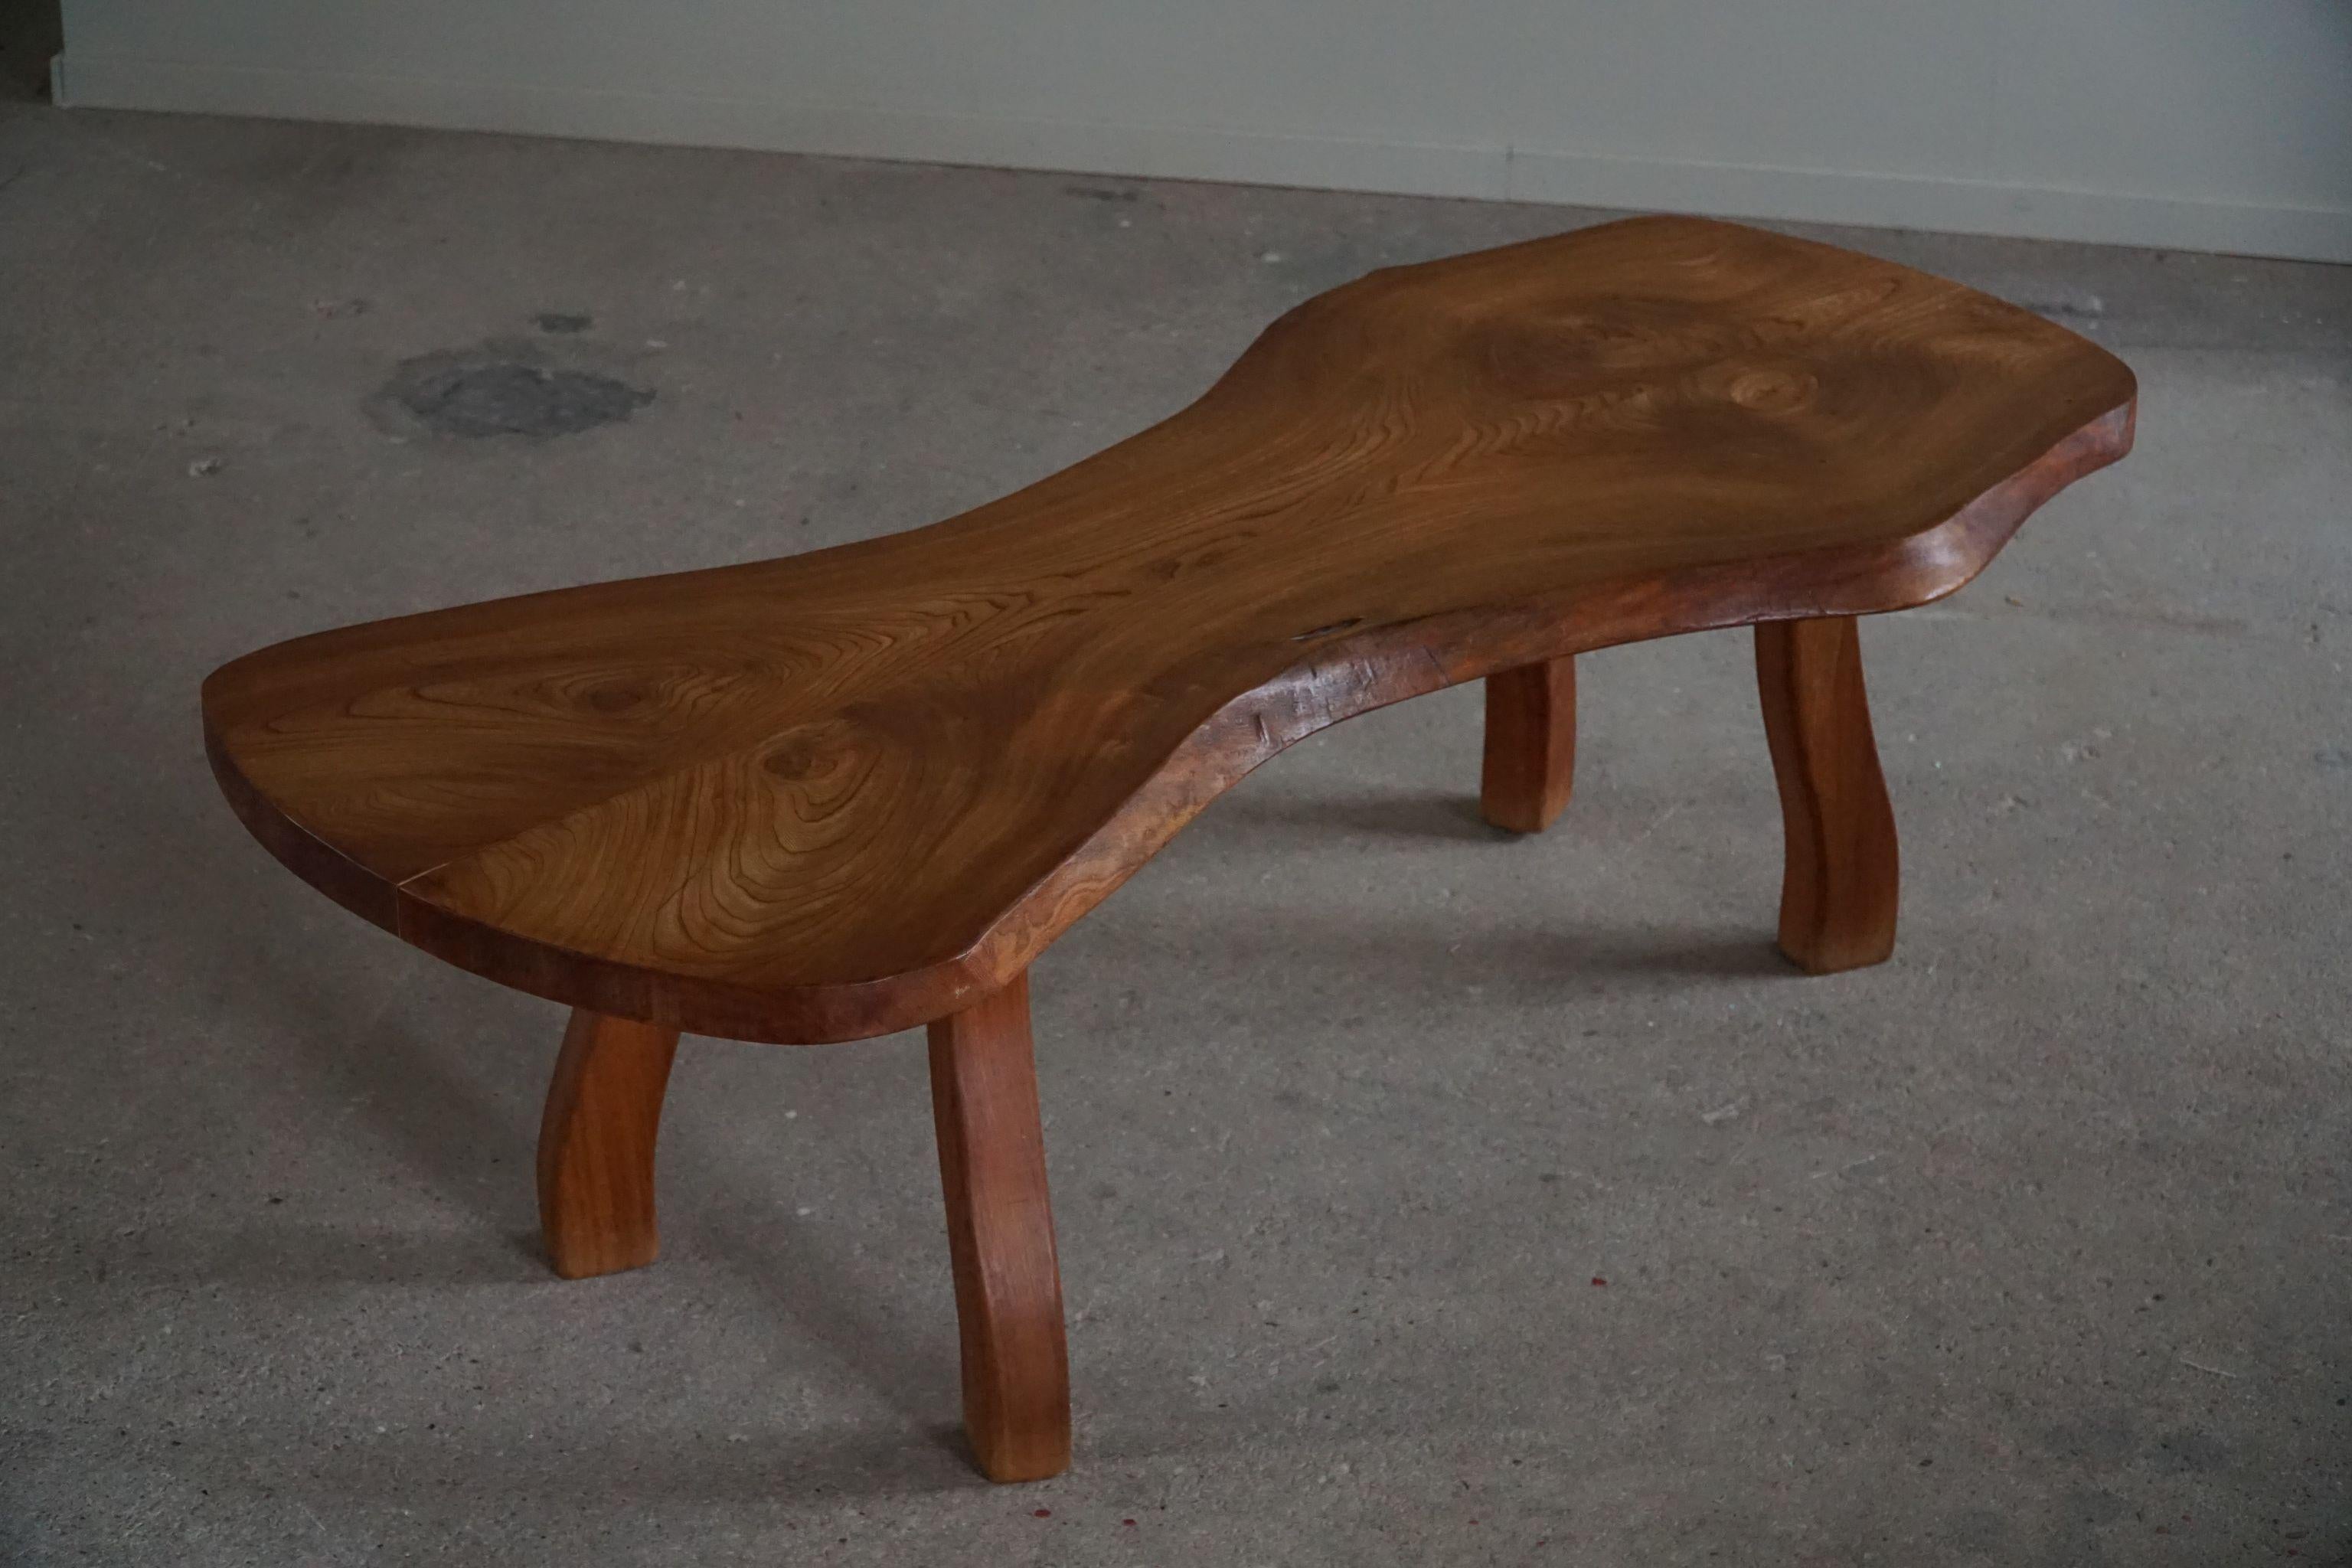 Swedish Modern, Organic Shaped Sofa Table in Elm by Carl-Axel Beijbom - 1968 For Sale 1